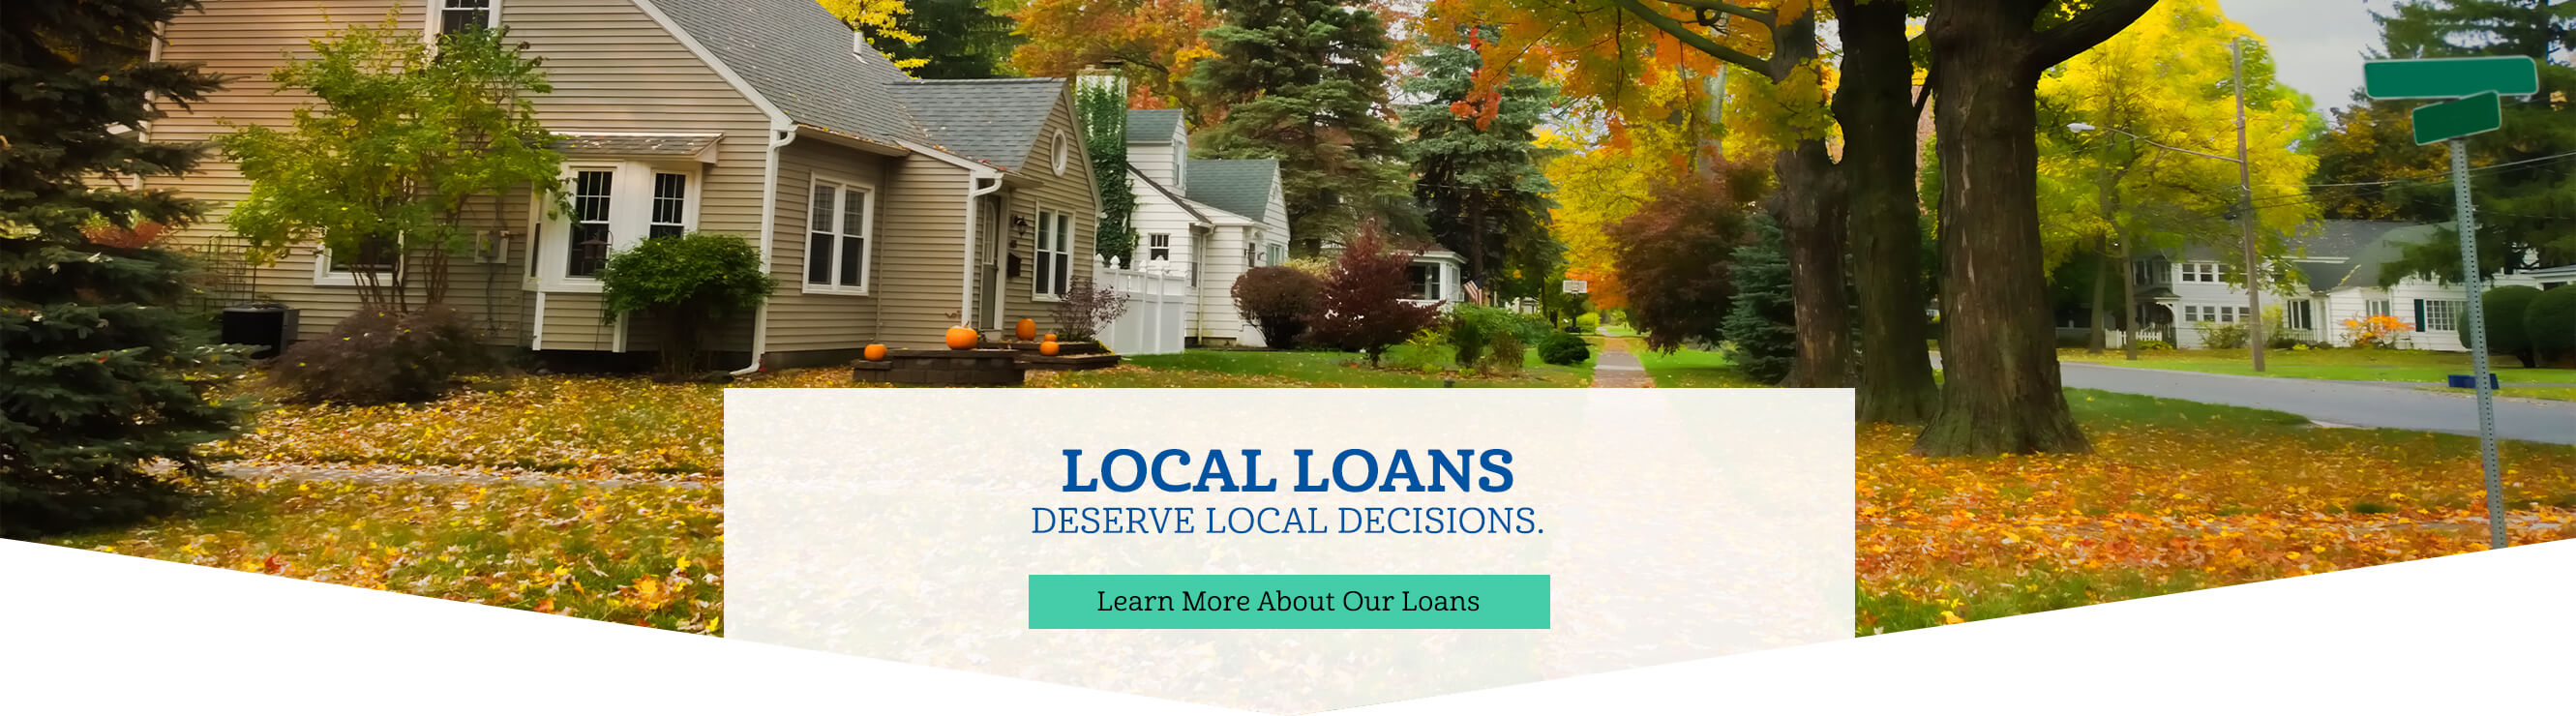 Local Loans